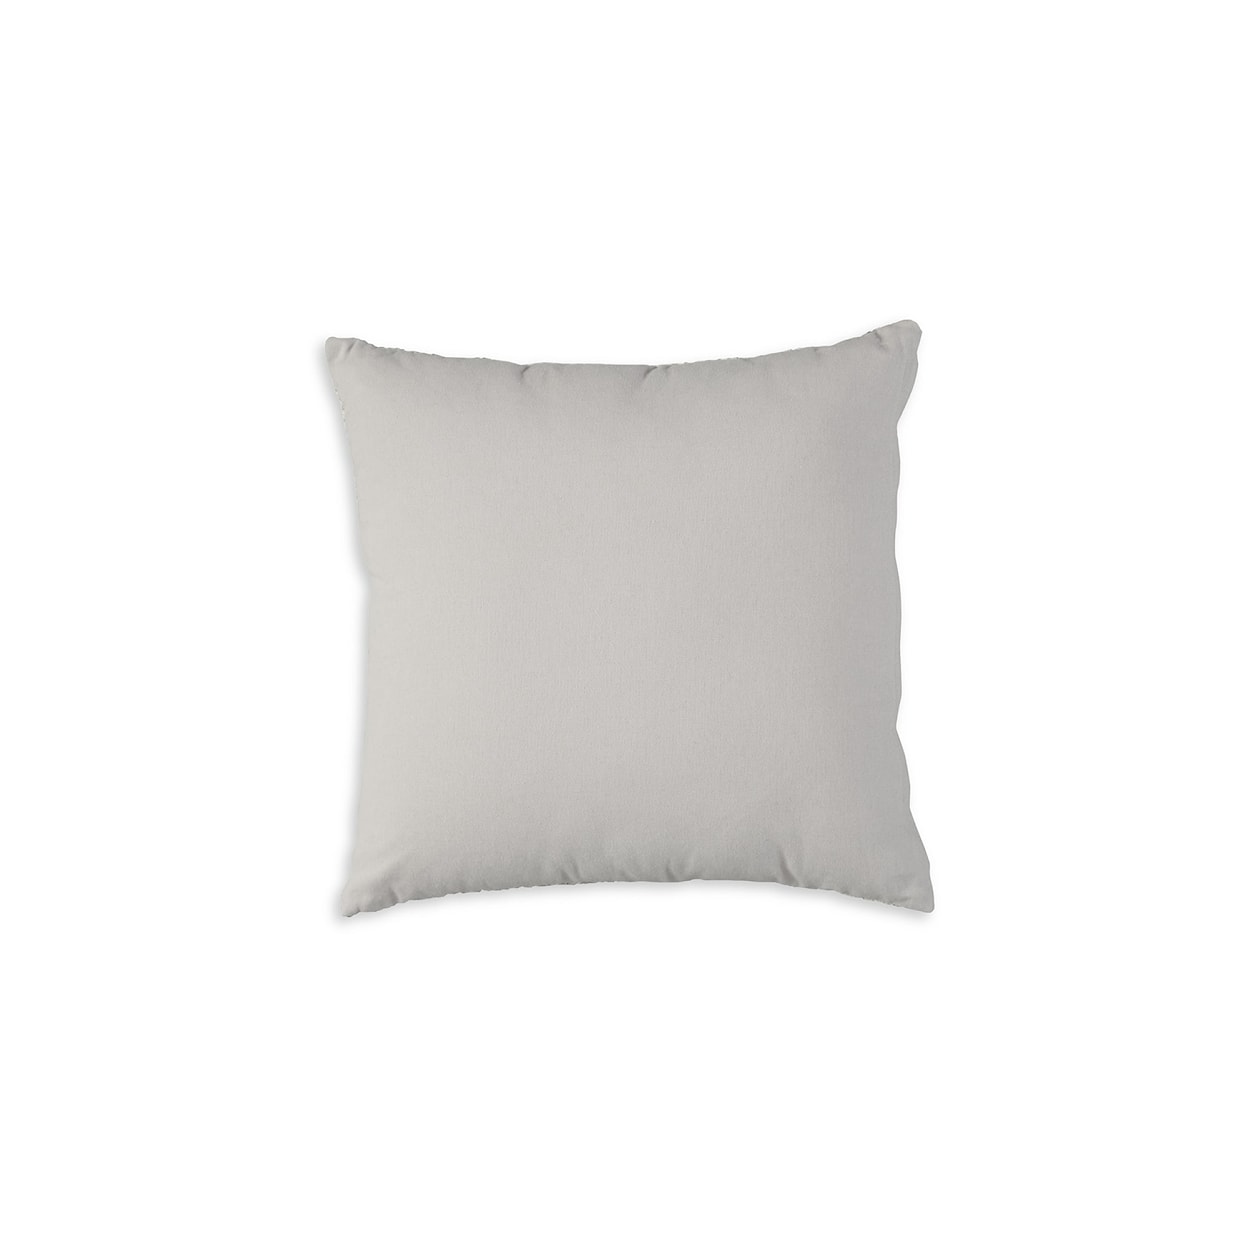 Ashley Furniture Signature Design Erline Pillow (Set of 4)